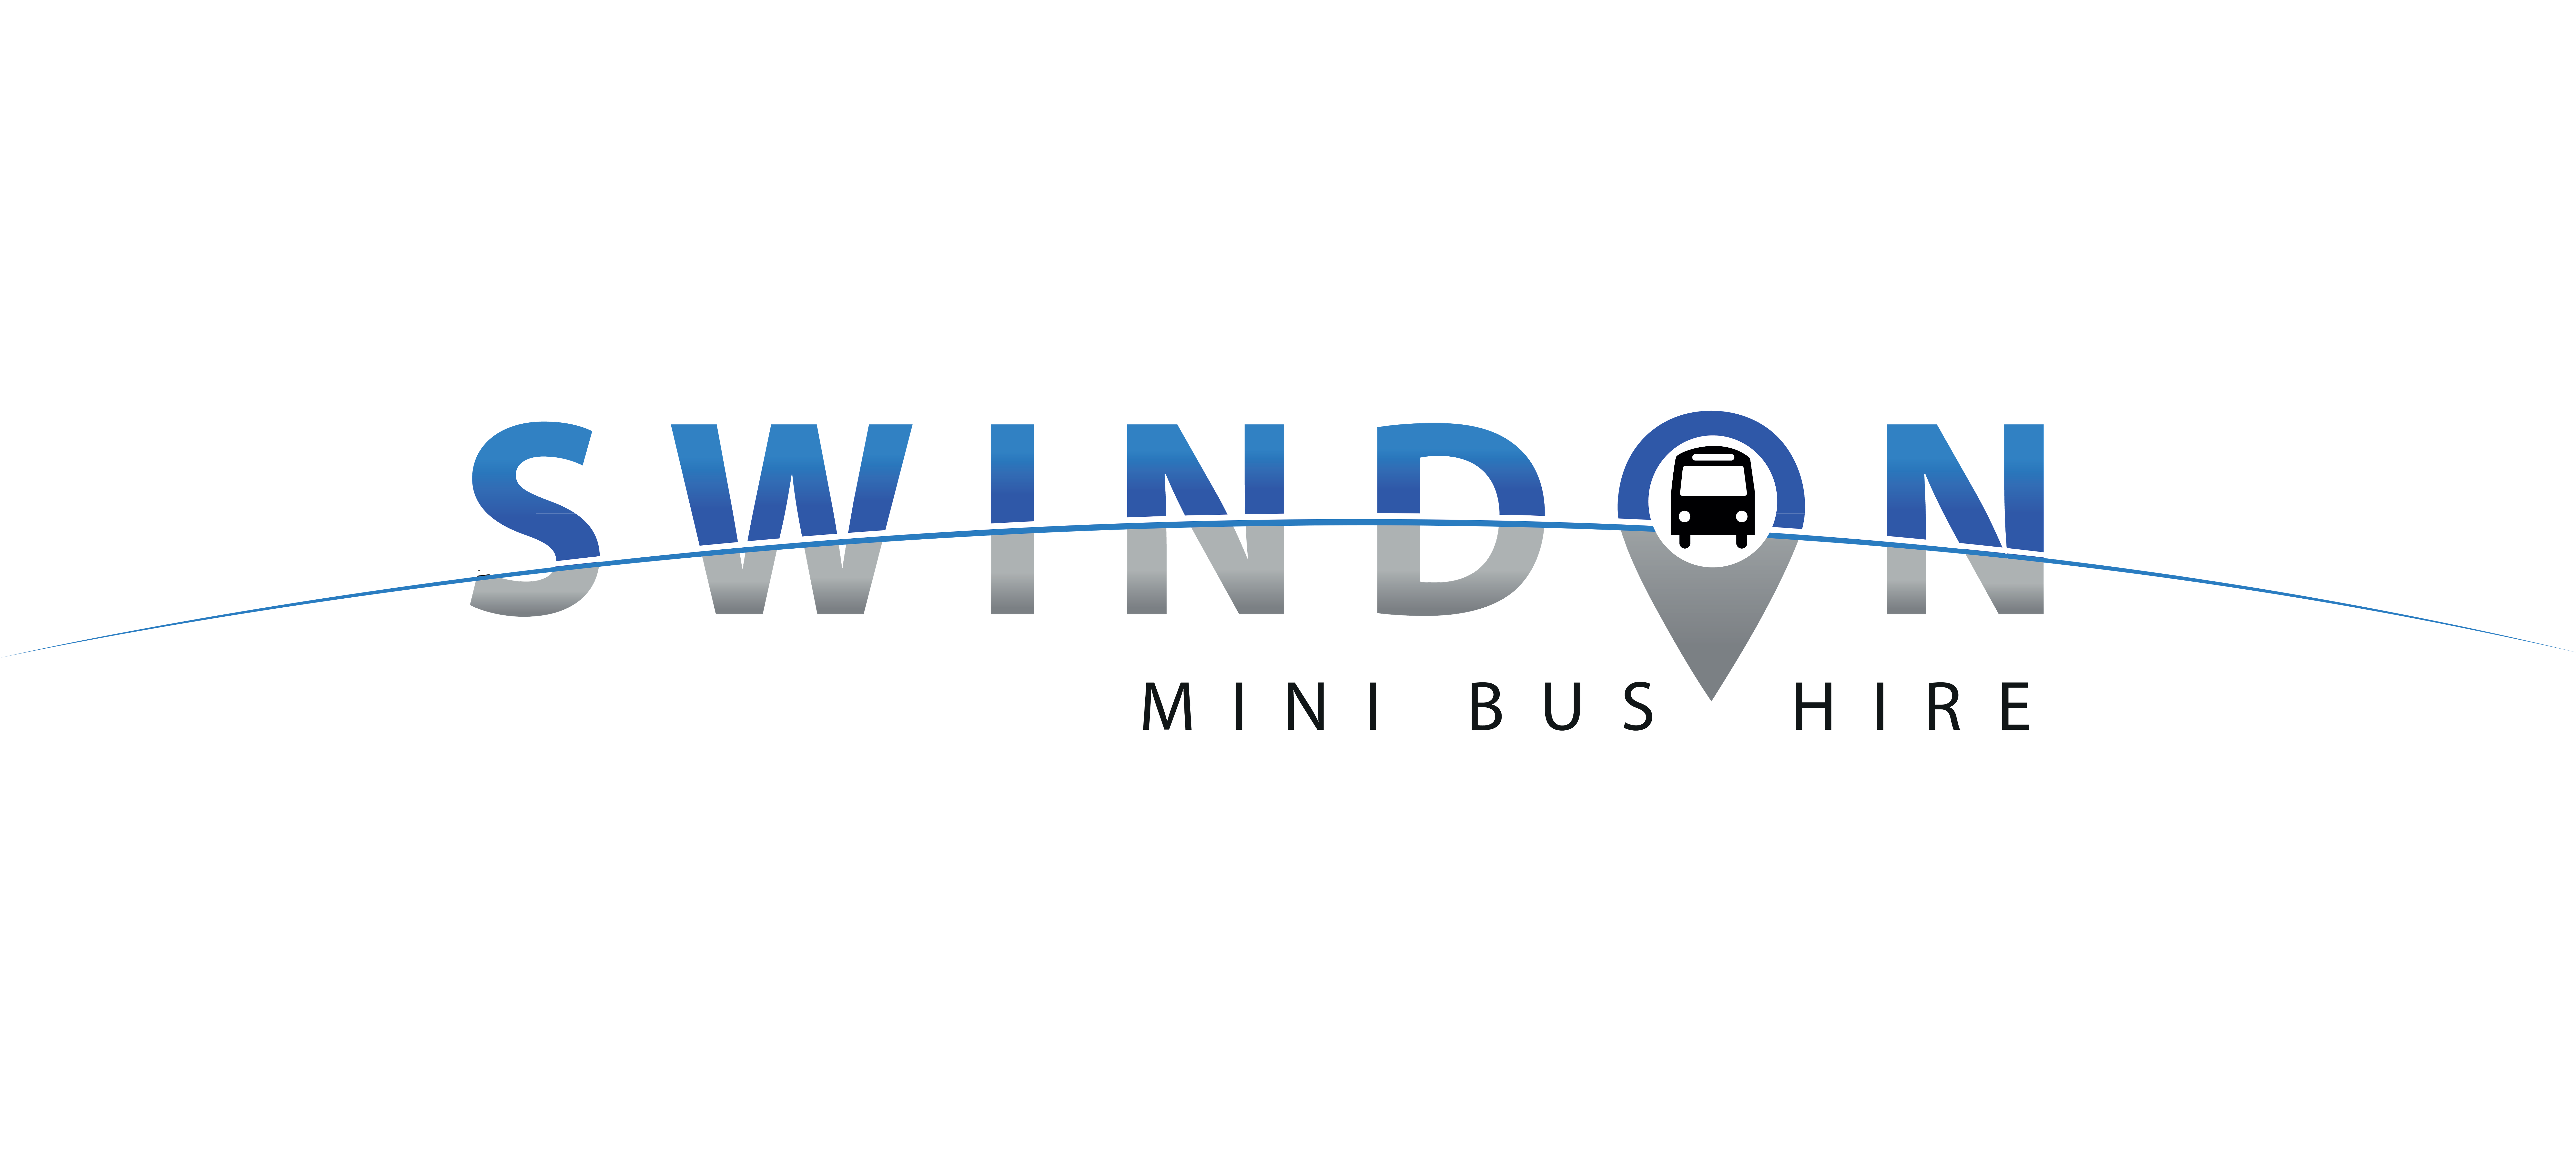 Swindon Minibus Hire